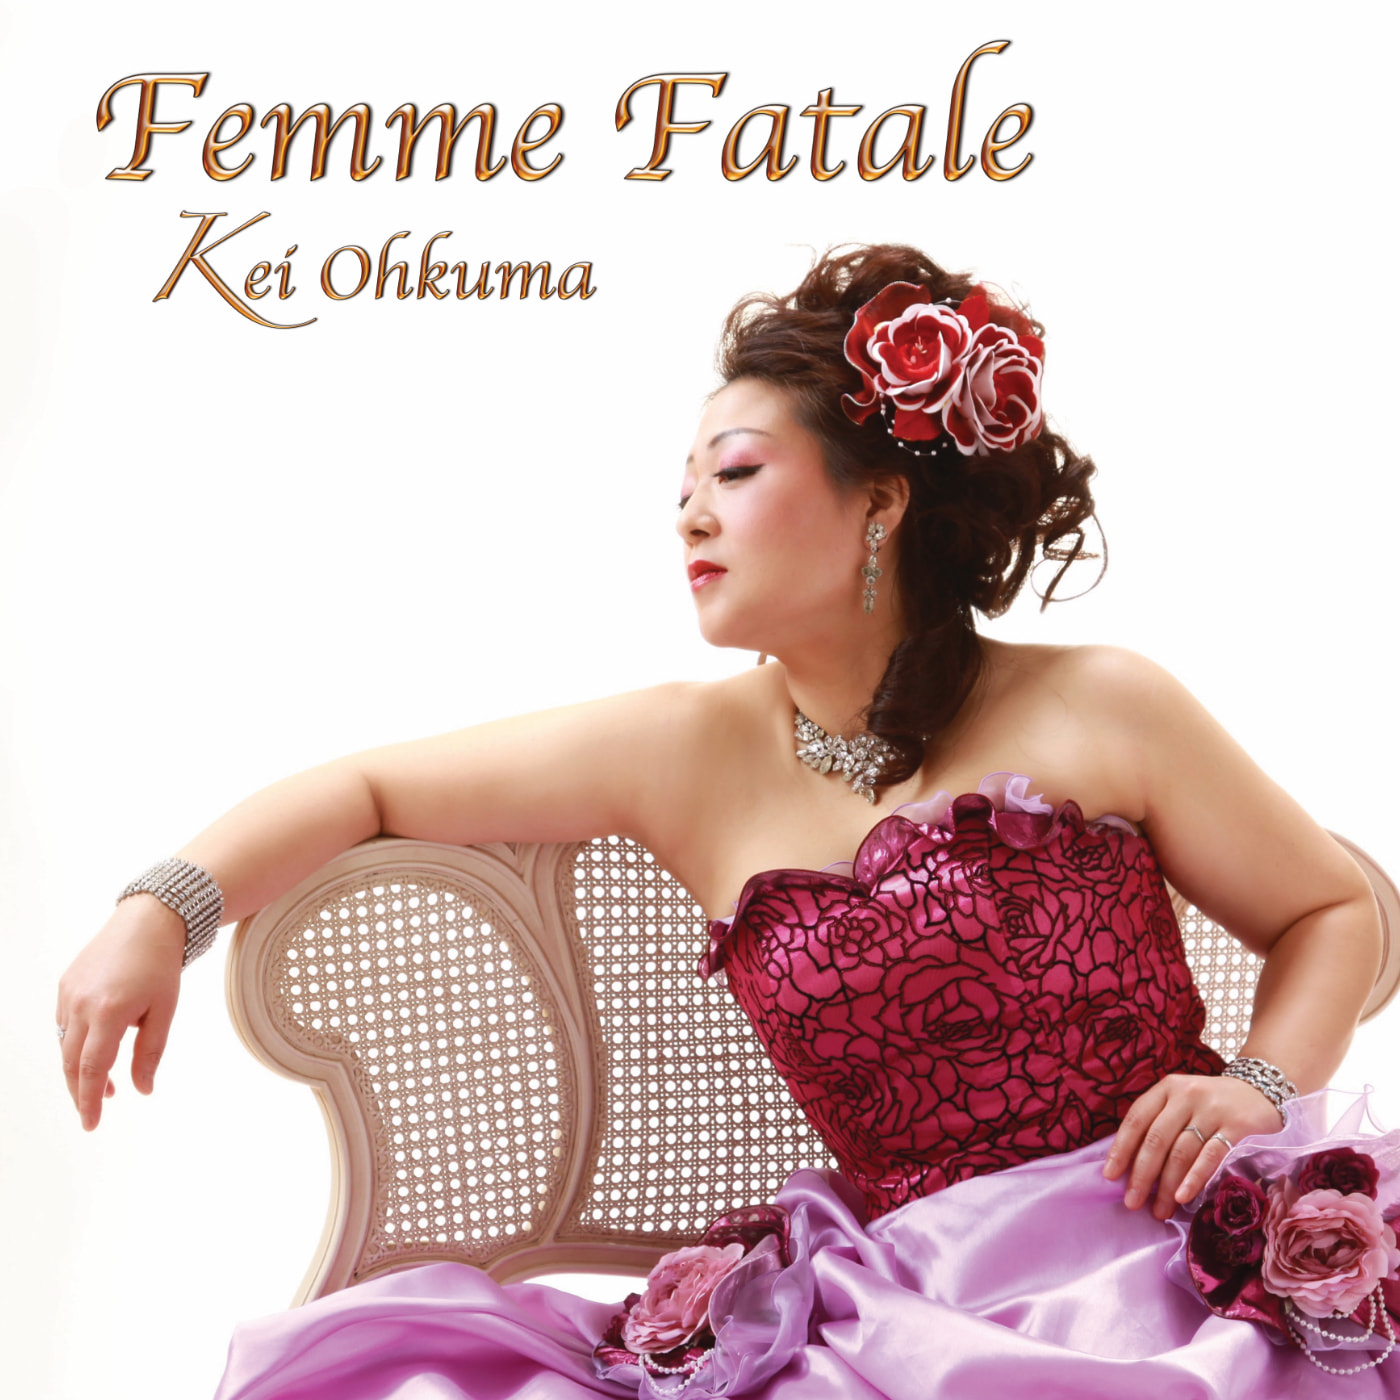 Fame Fatal Kei Ohkuma